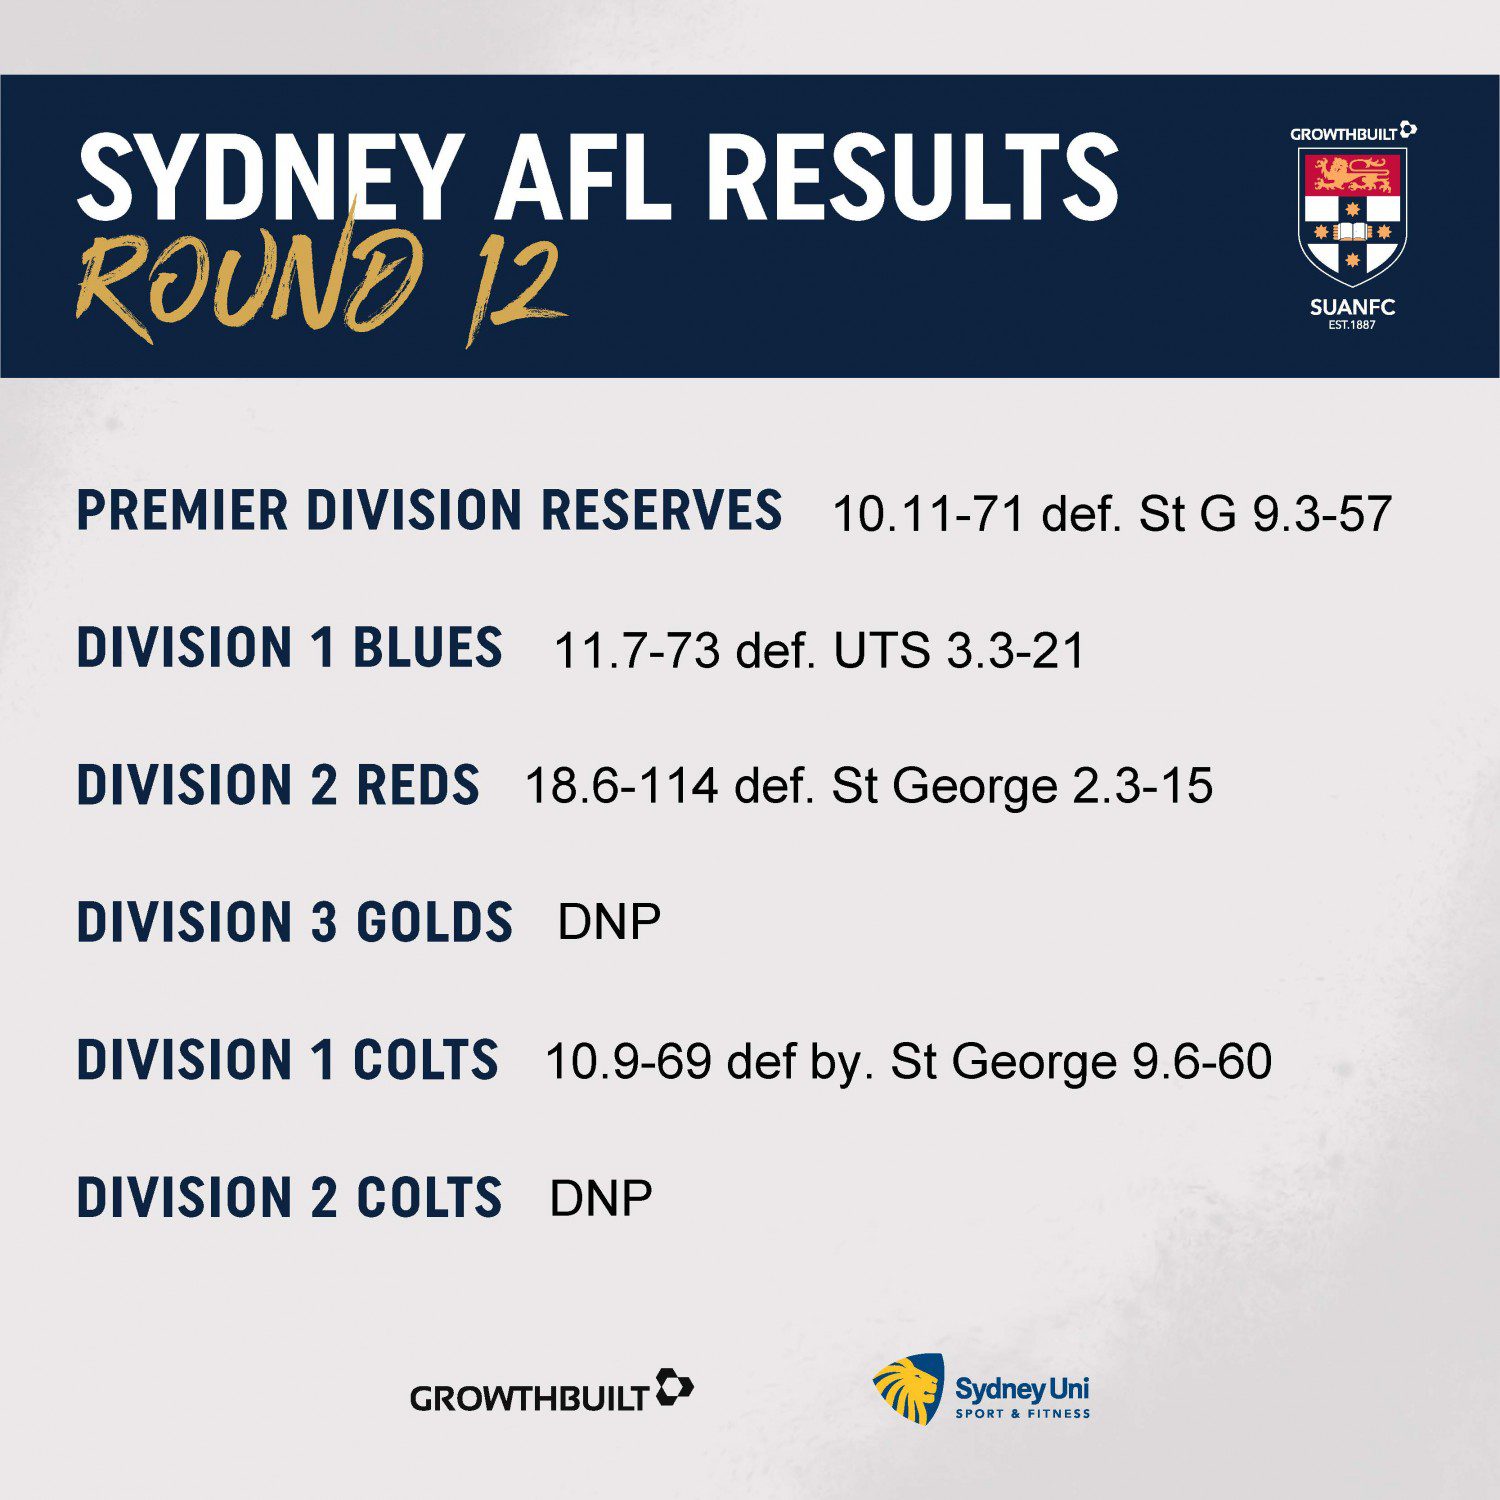 15540_SYDNUNSP_SUANFC Team Selection & Results_Sydney AFL Results